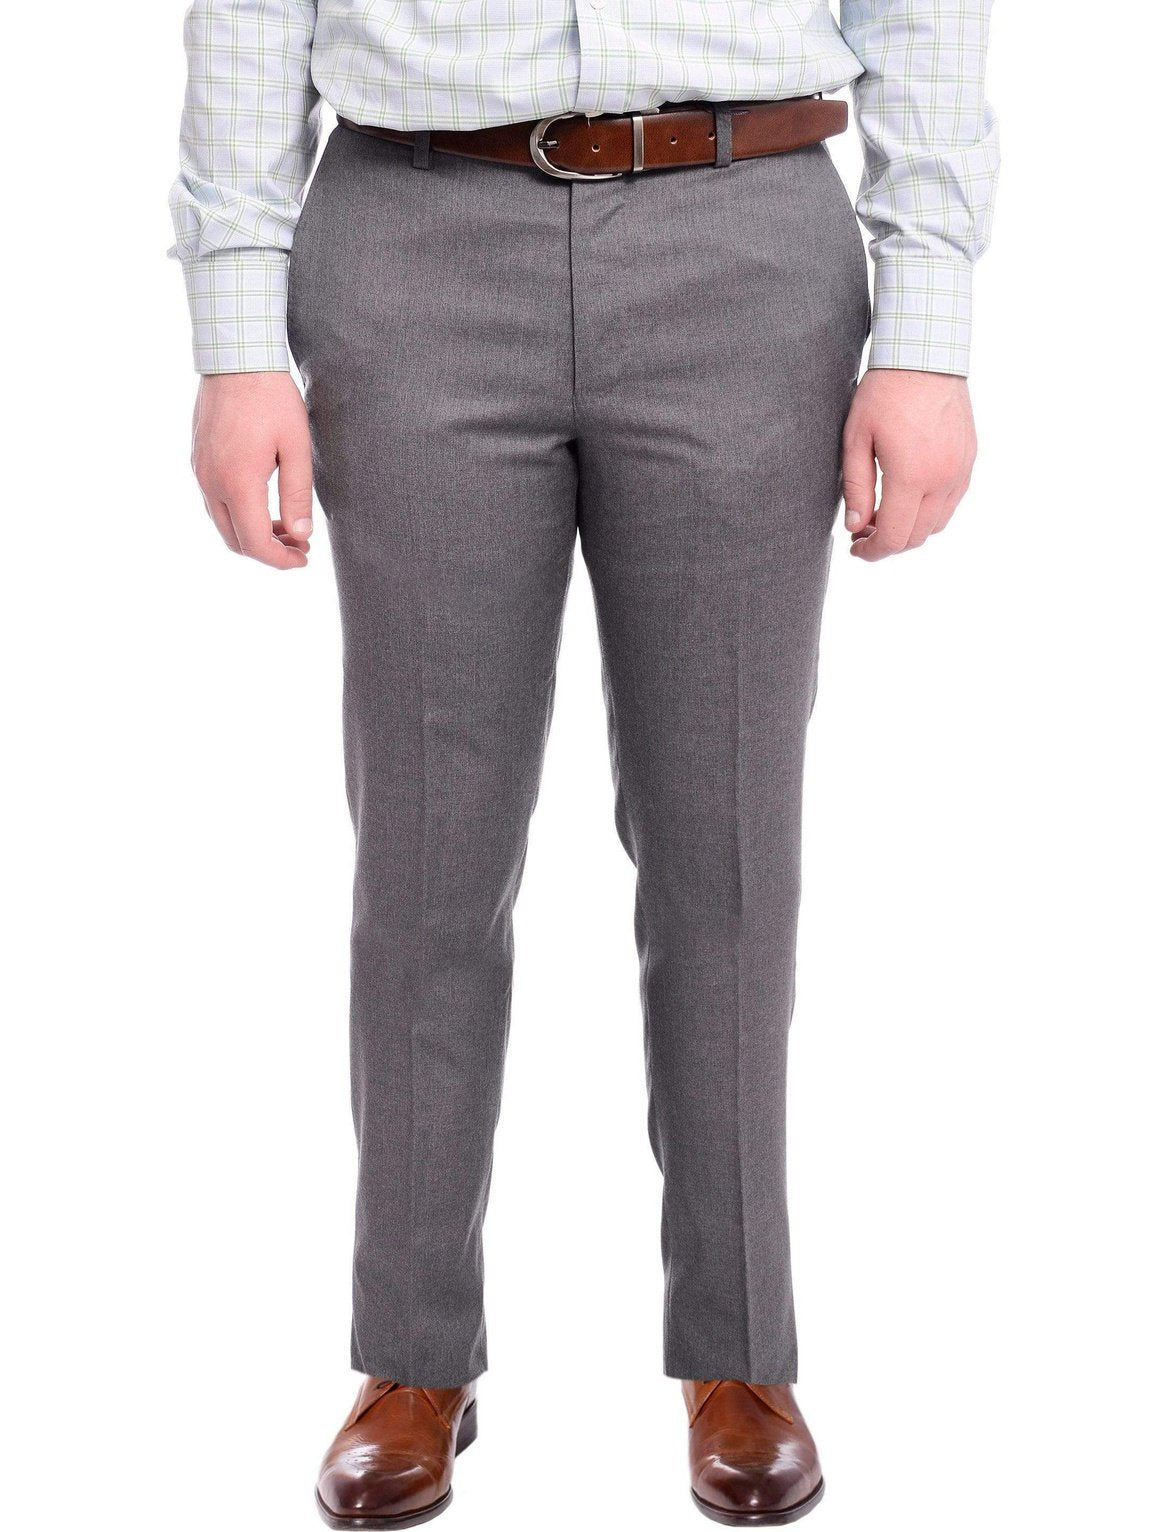 Napoli PANTS Napoli Slim Fit Solid Gray Flat Front Wool Dress Pants